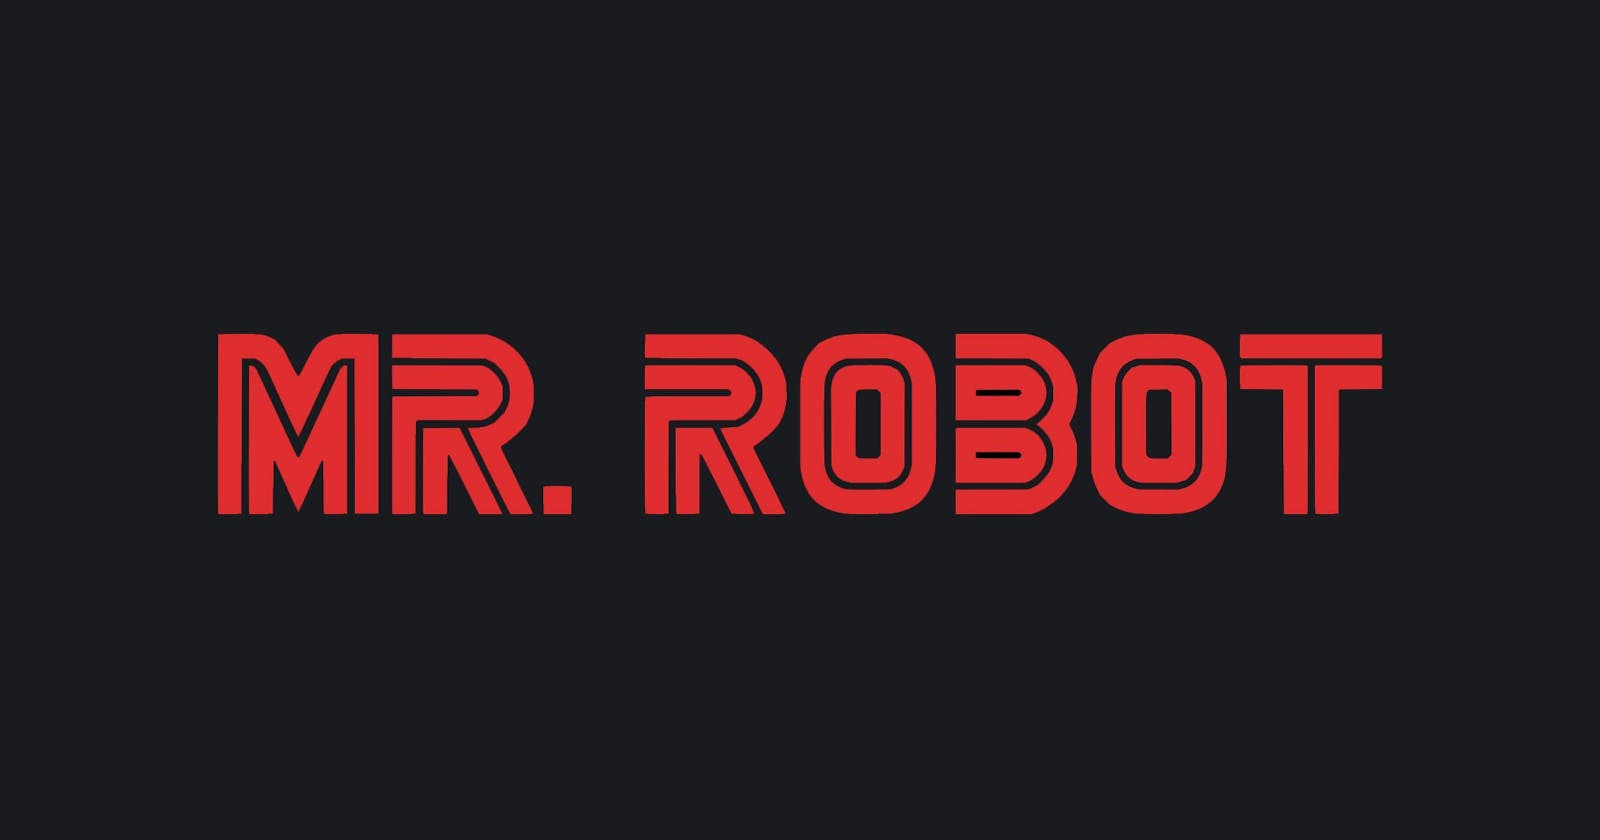 Mr-Robot: 1 ~ VulnHub